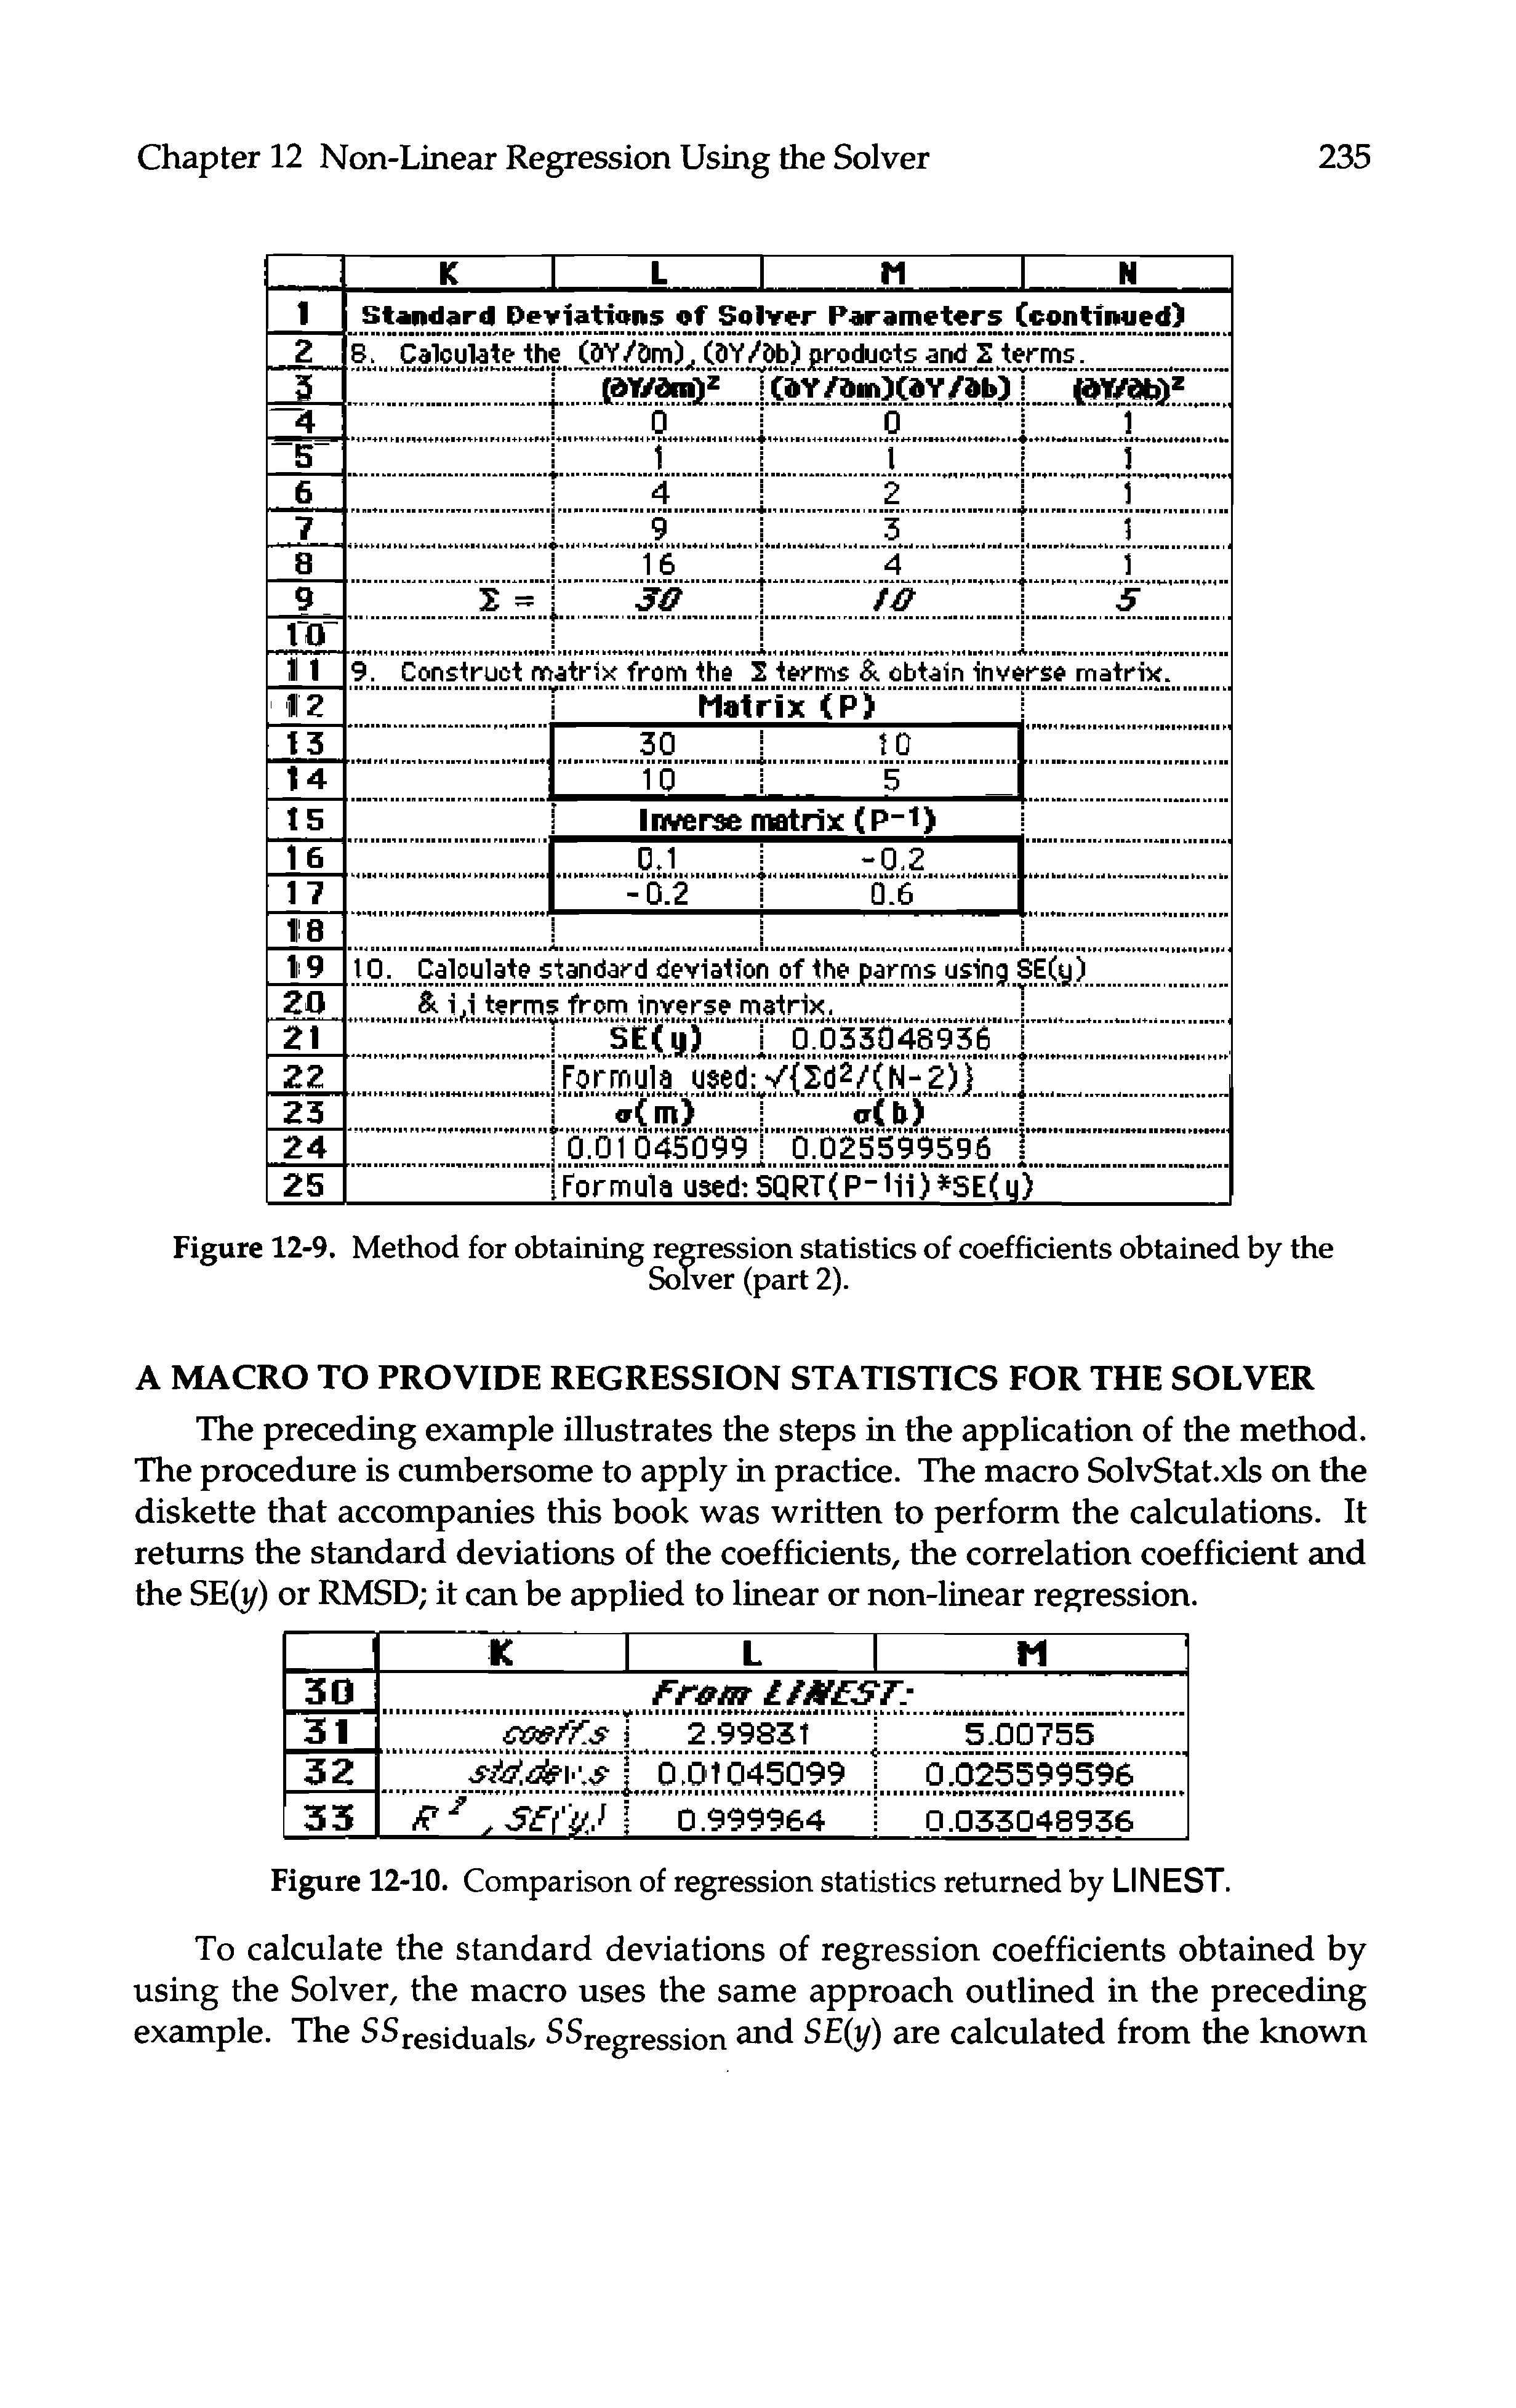 Figure 12-10. Comparison of regression statistics returned by LI NEST.